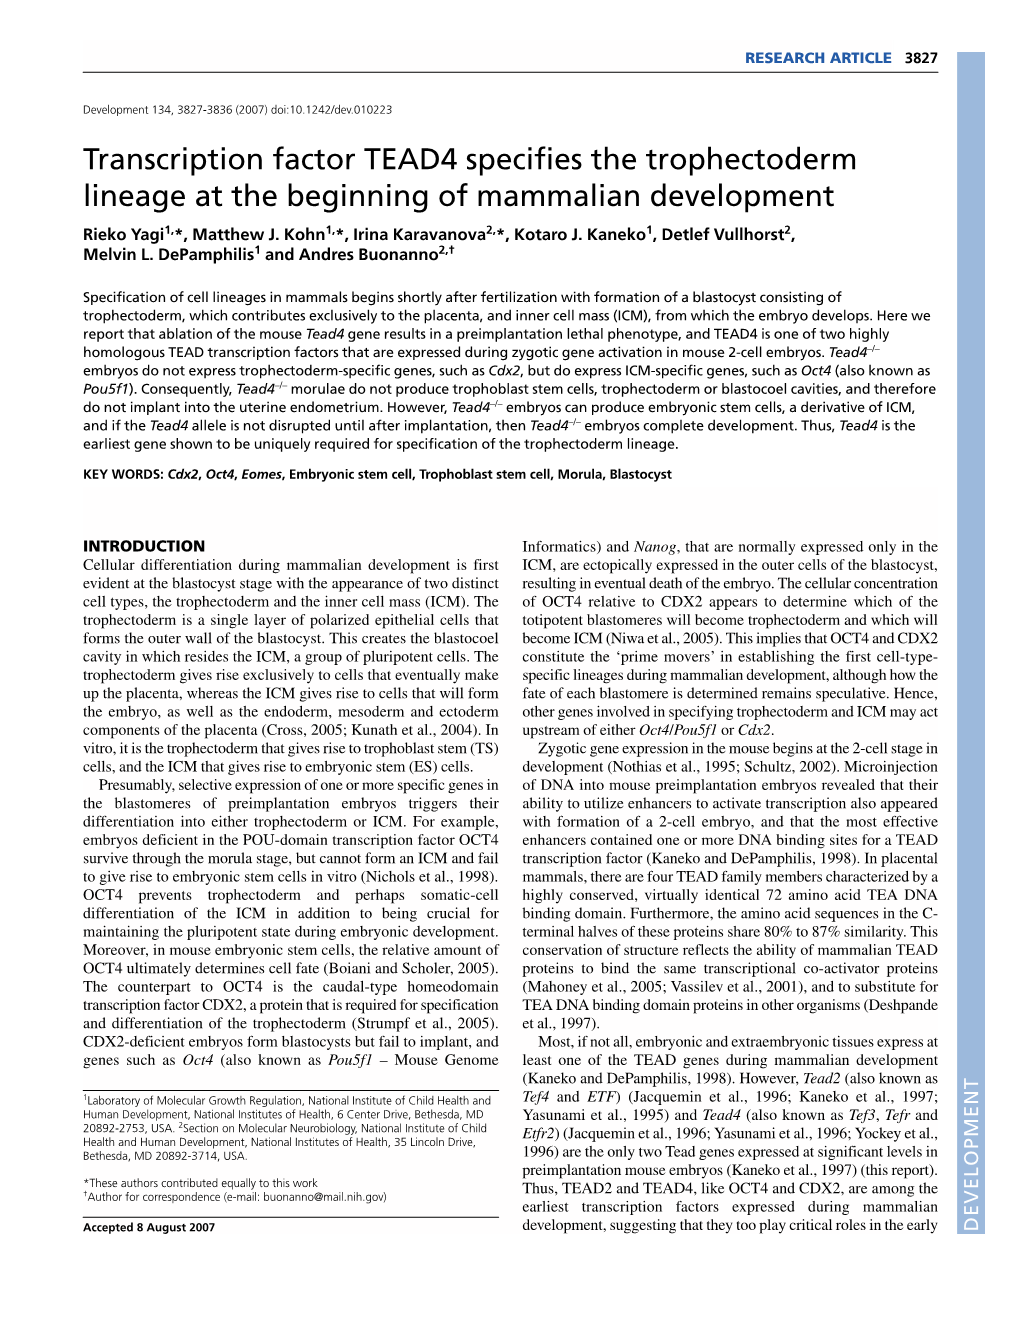 Transcription Factor TEAD4 Specifies the Trophectoderm Lineage at the Beginning of Mammalian Development Rieko Yagi1,*, Matthew J